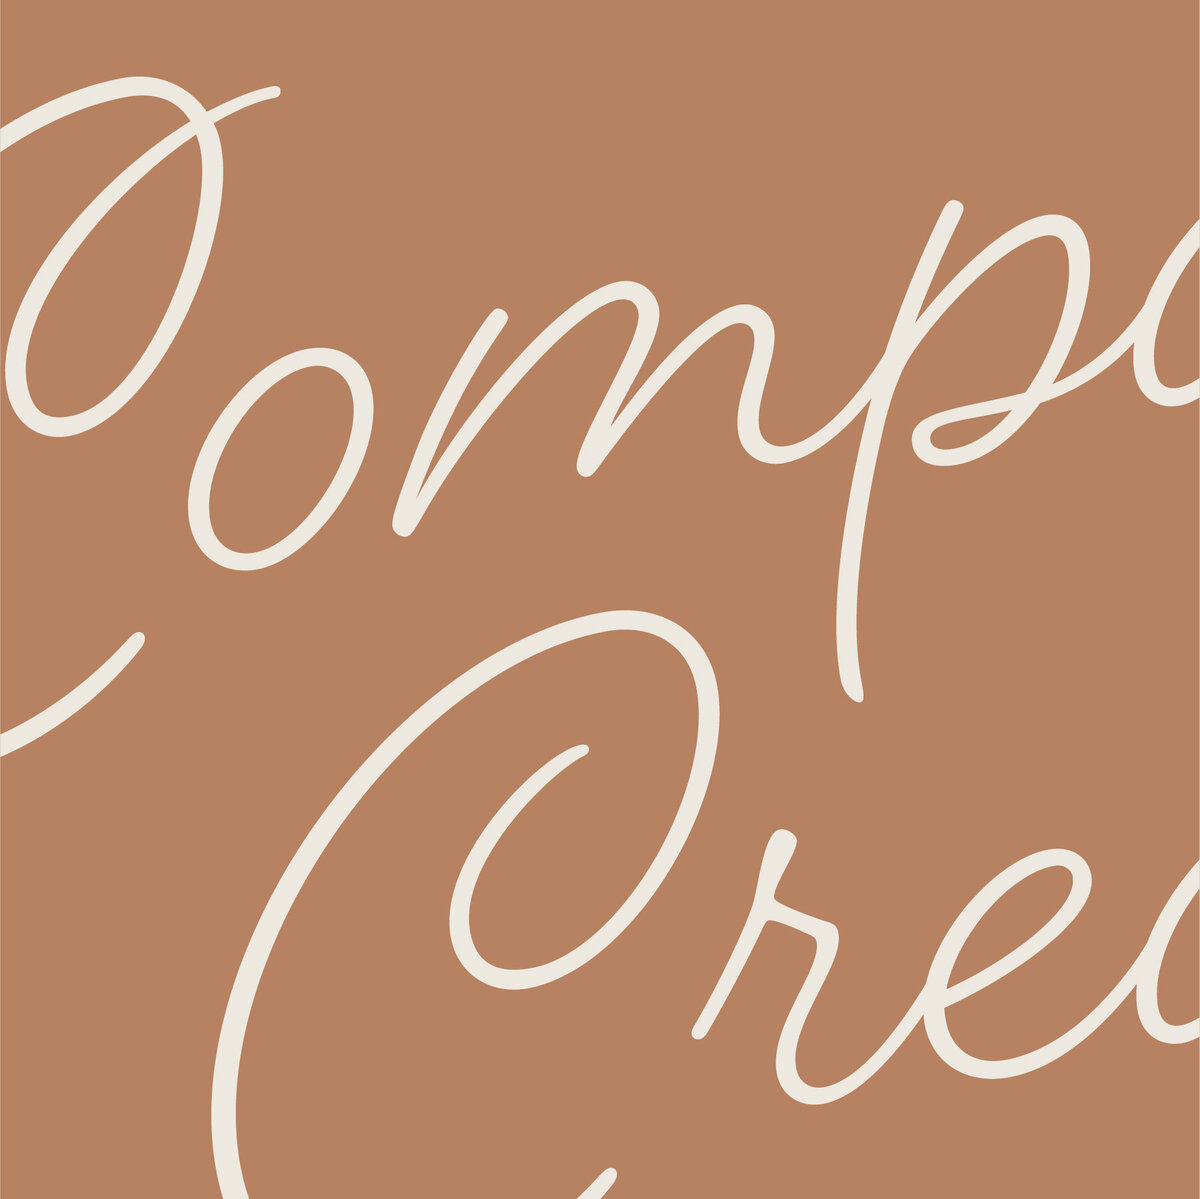 Compassionut Creamery 315 Design-03